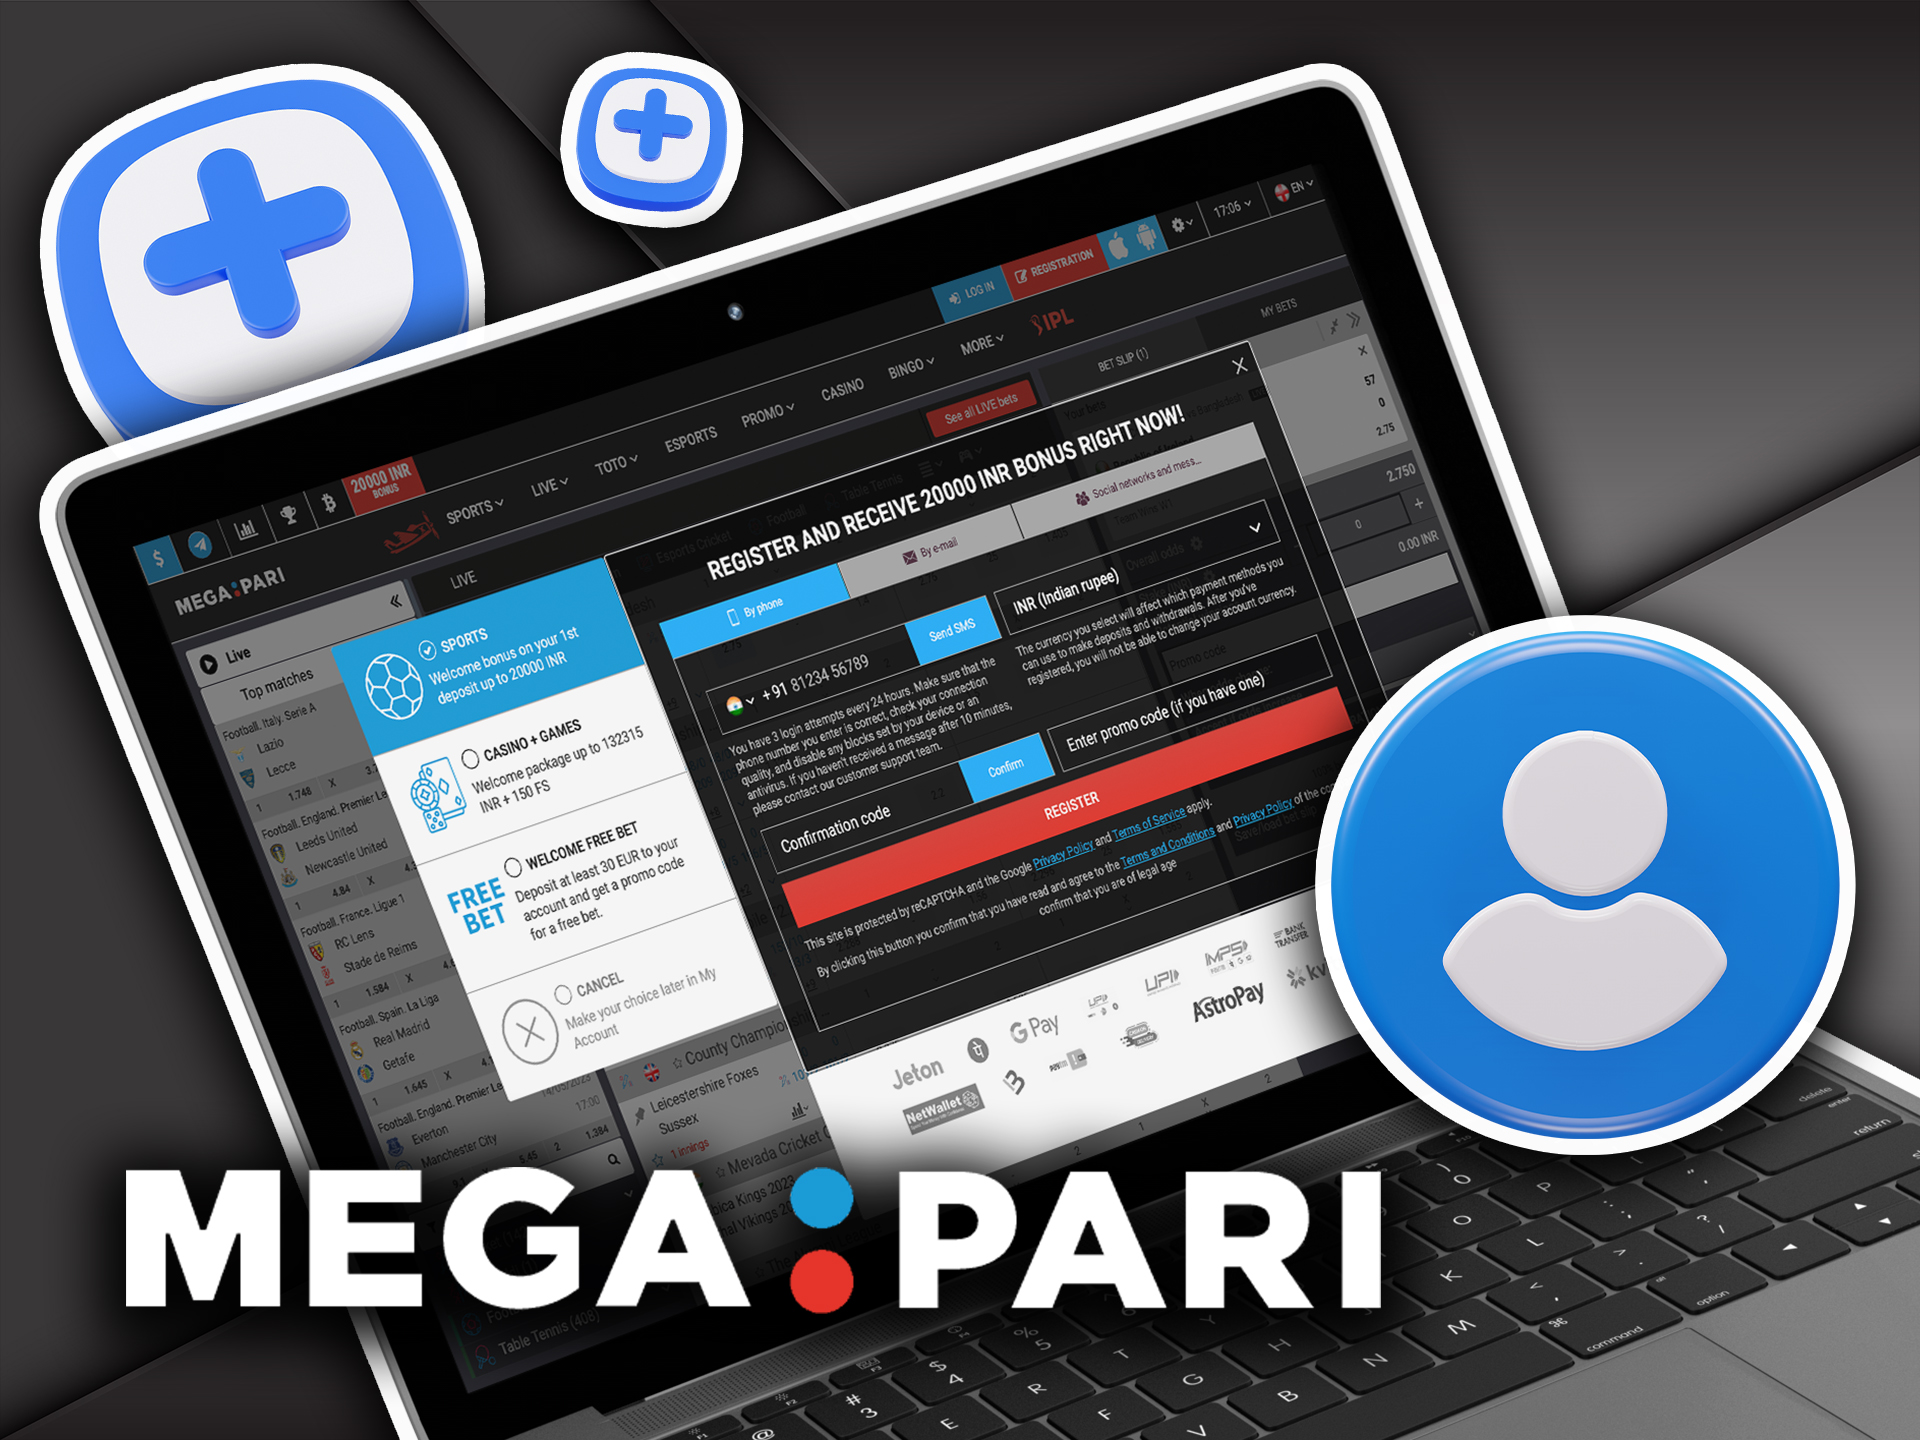 Click on registration button to create Megapari account.